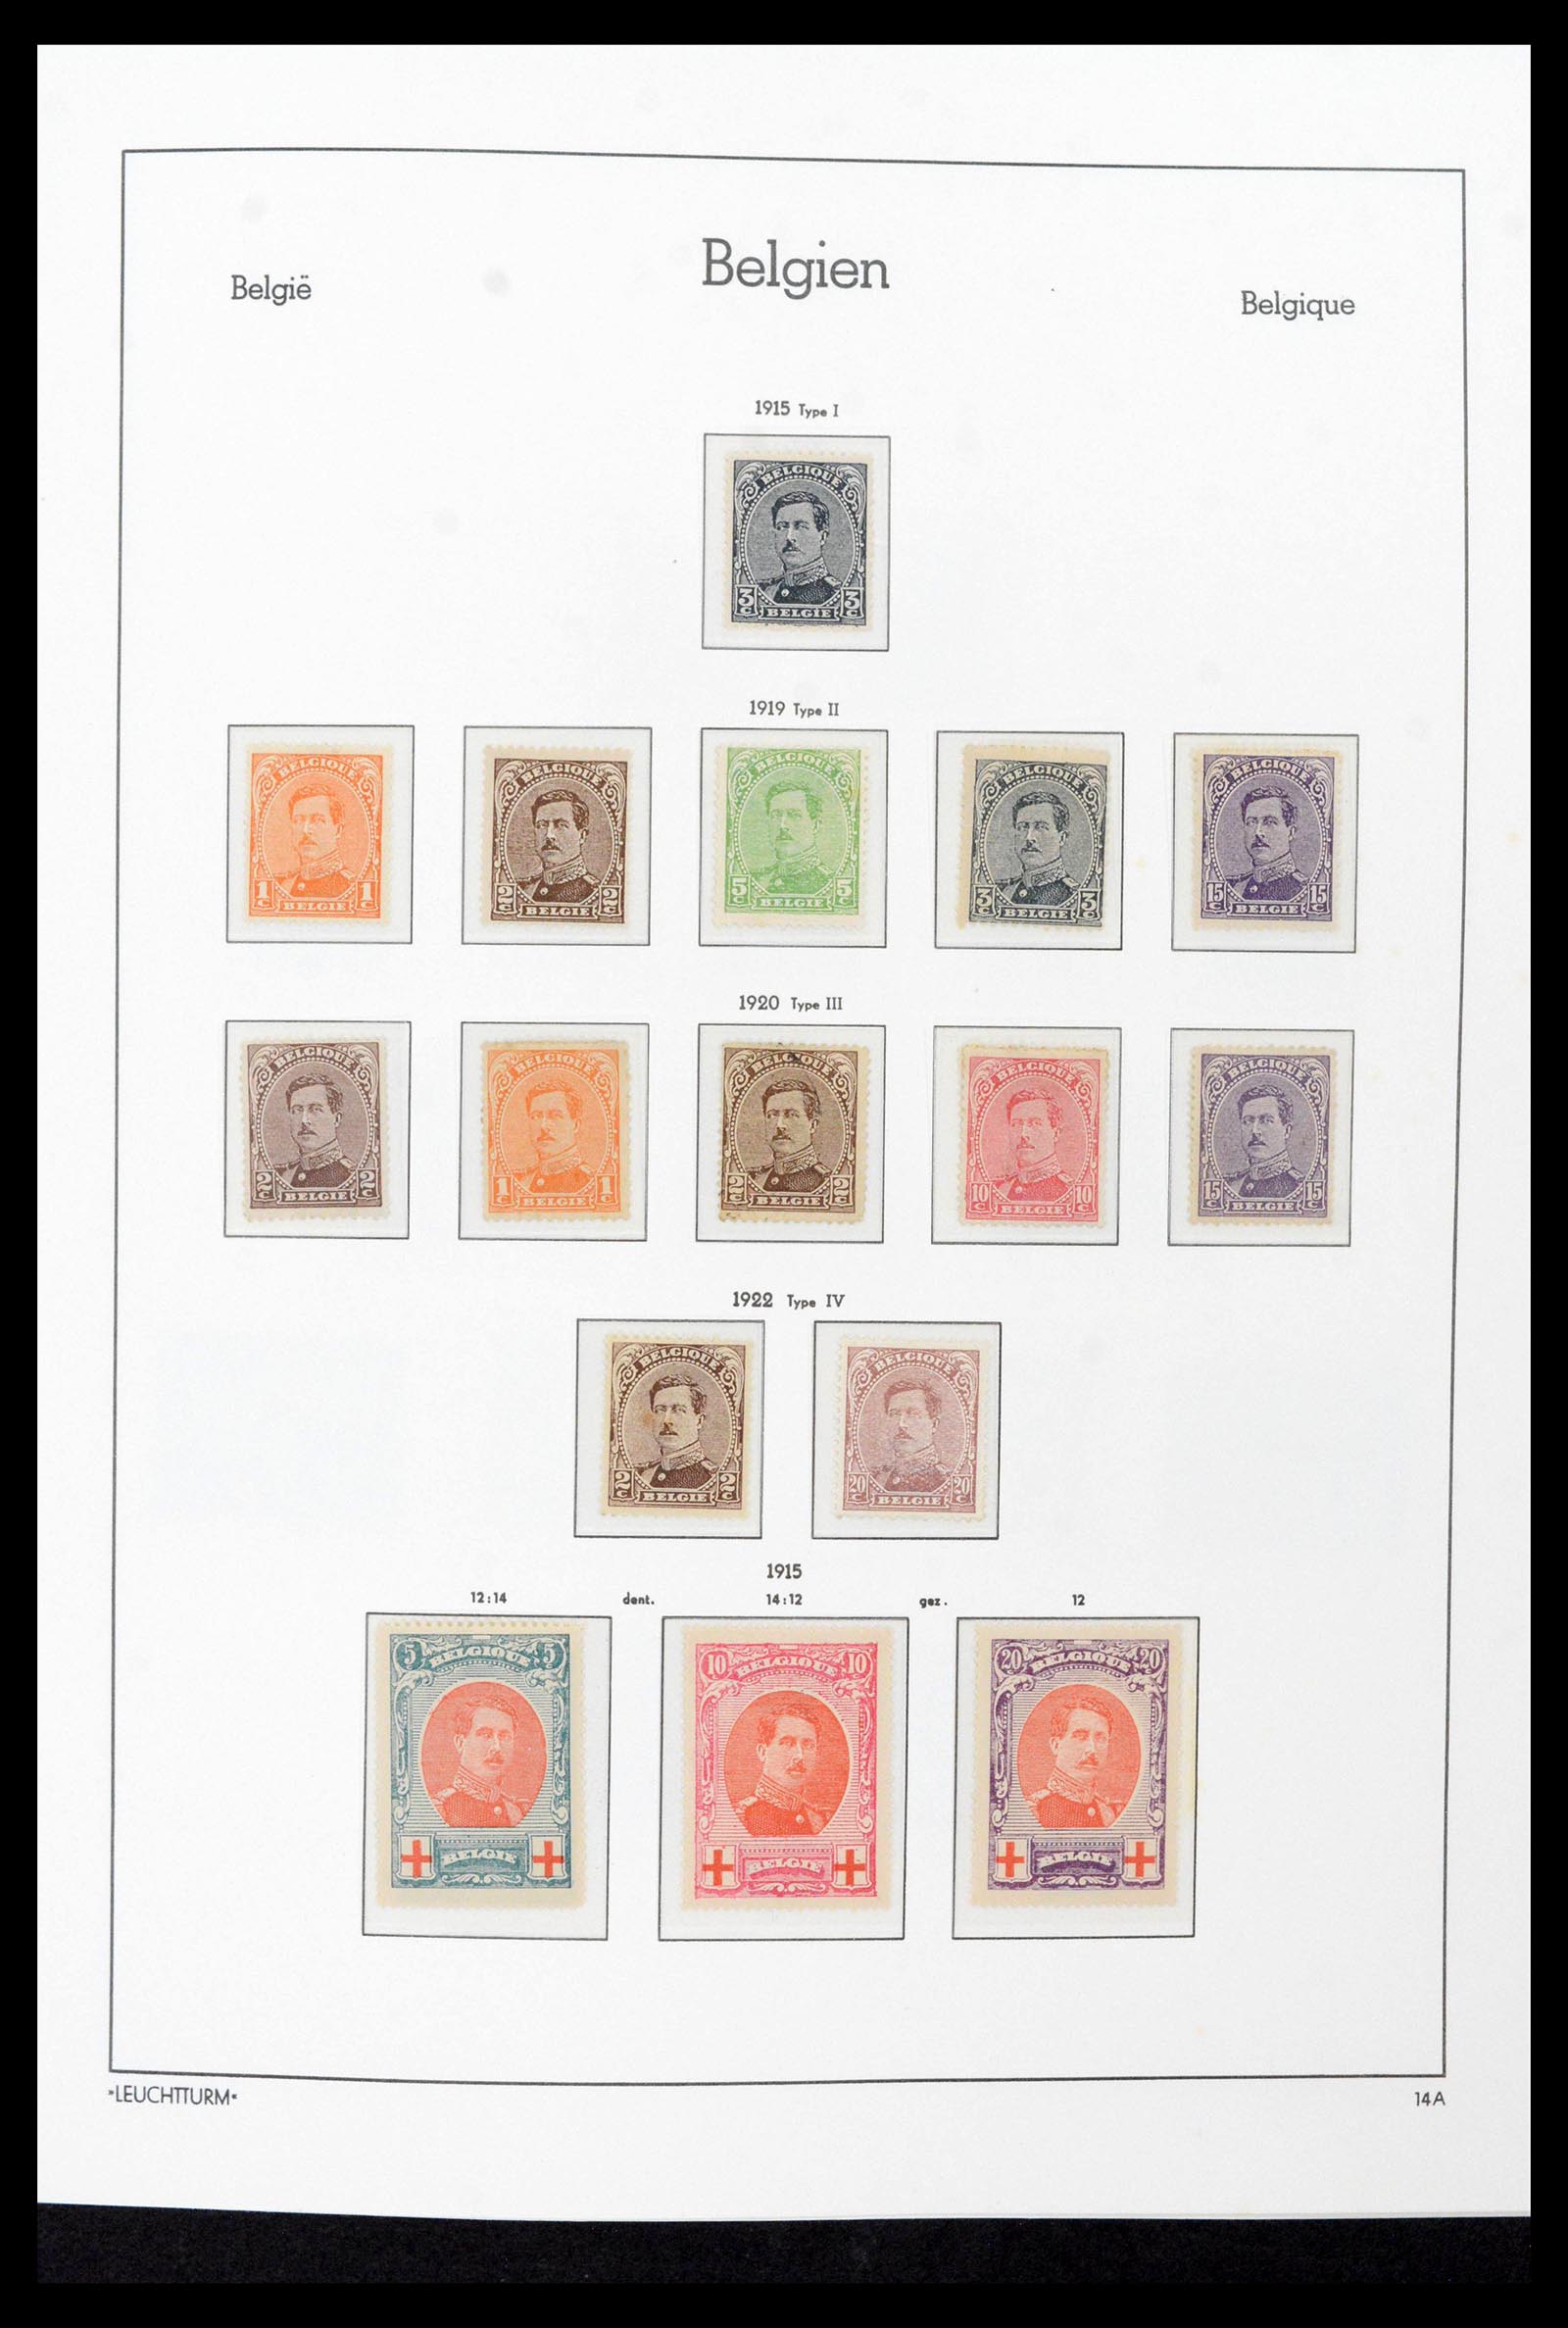 39137 0020 - Stamp collection 39137 Belgium 1849-2002.